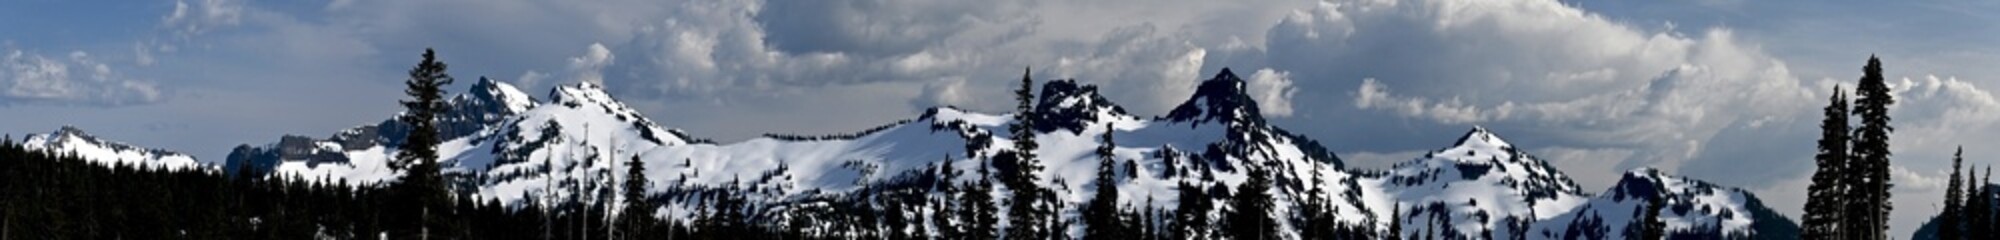 Tatoosh range in Washington state, a 9 shot panorama seen from Mt Rainier on a dramatic spring day...